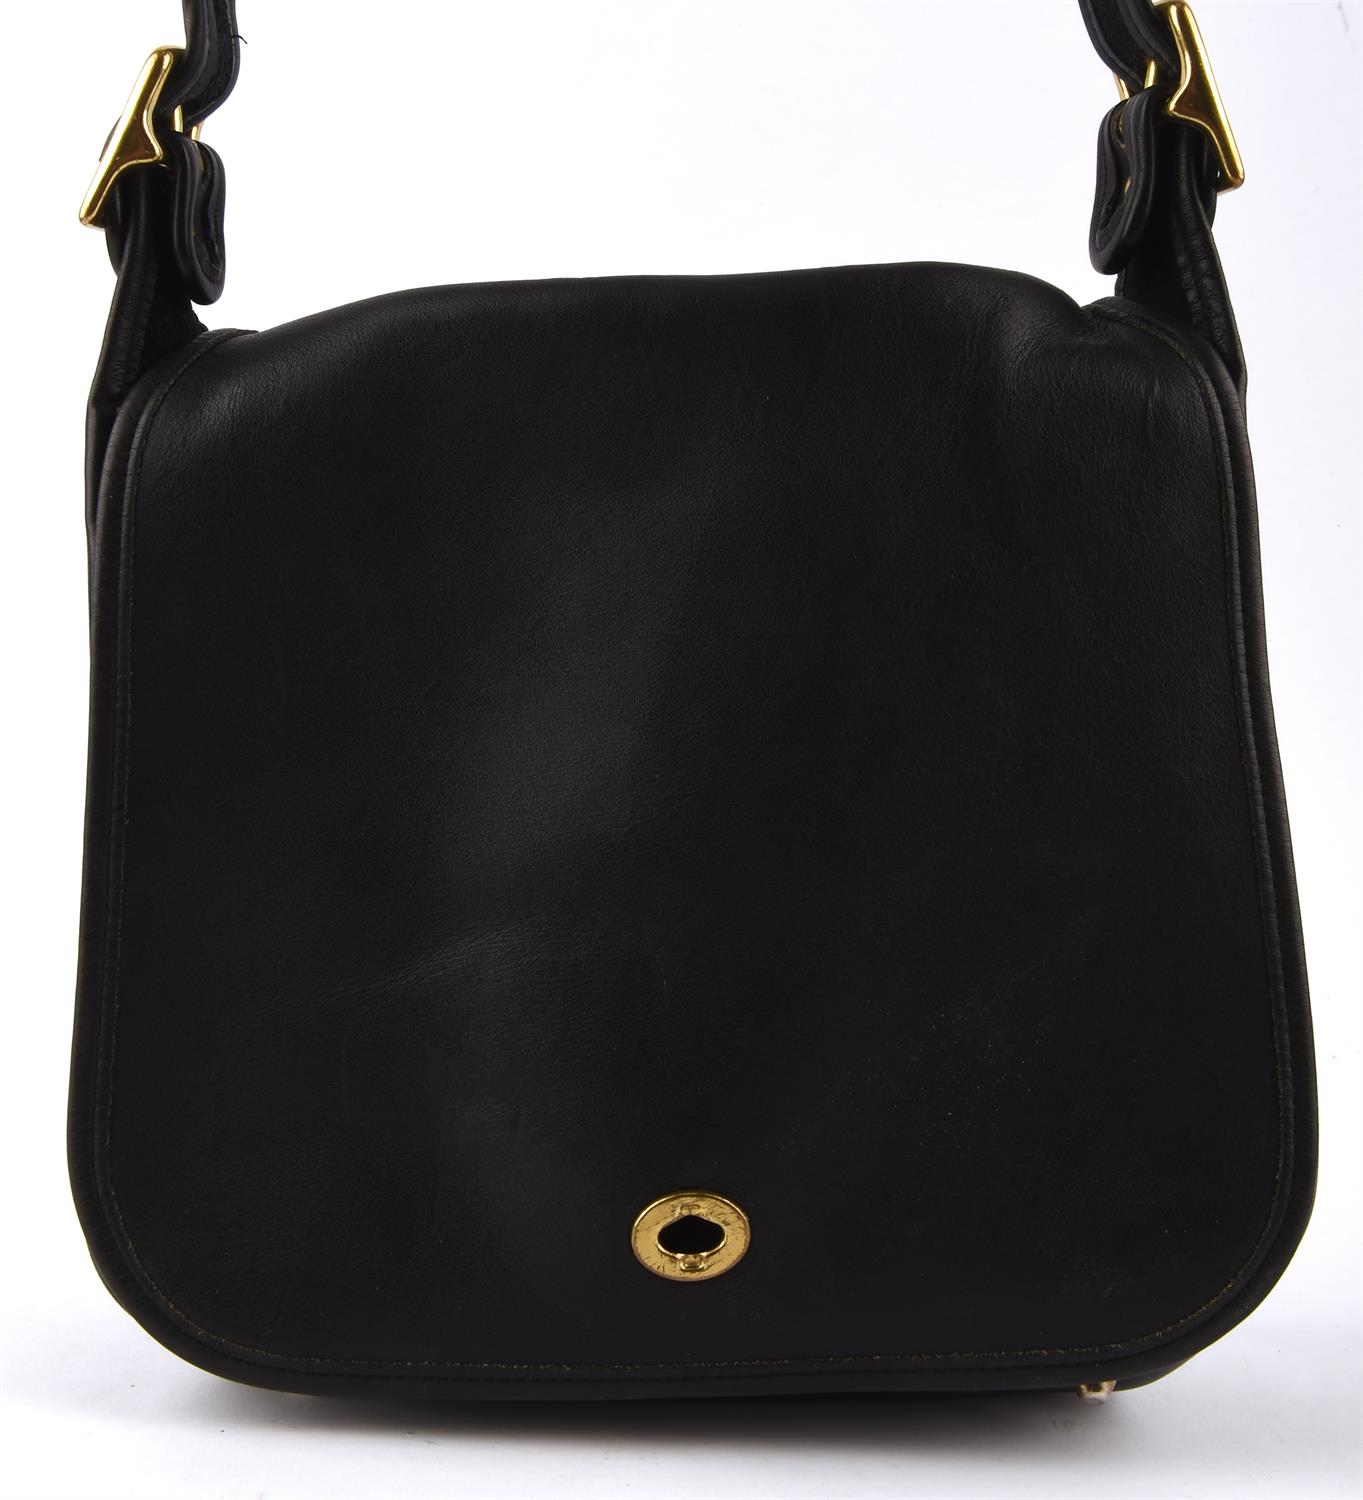 COACH black leather handbag (29cm x 26cm x 11cm) - Image 3 of 4